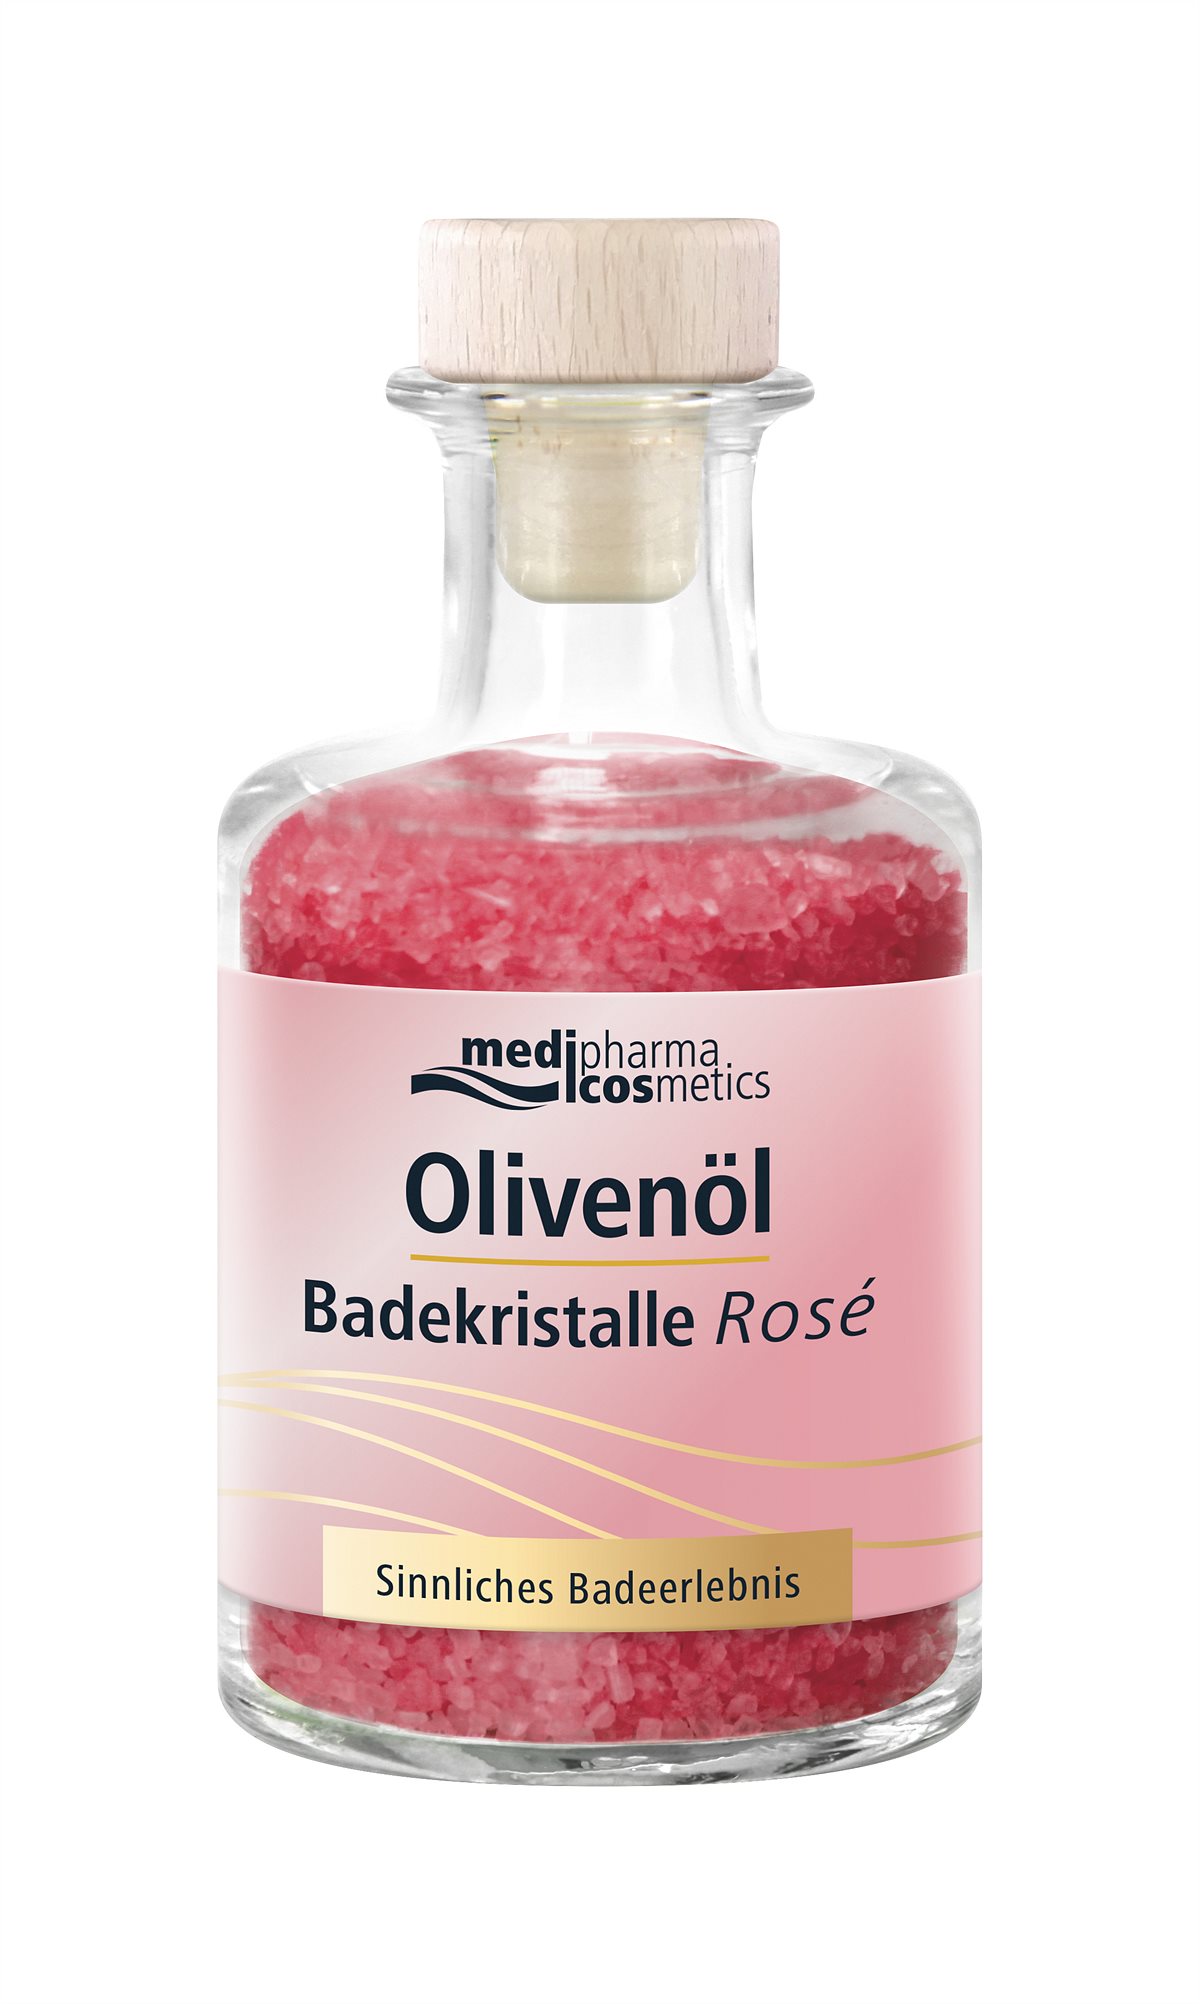 medipharma-cosmetics-Olivenoel-Badekristalle-Rose